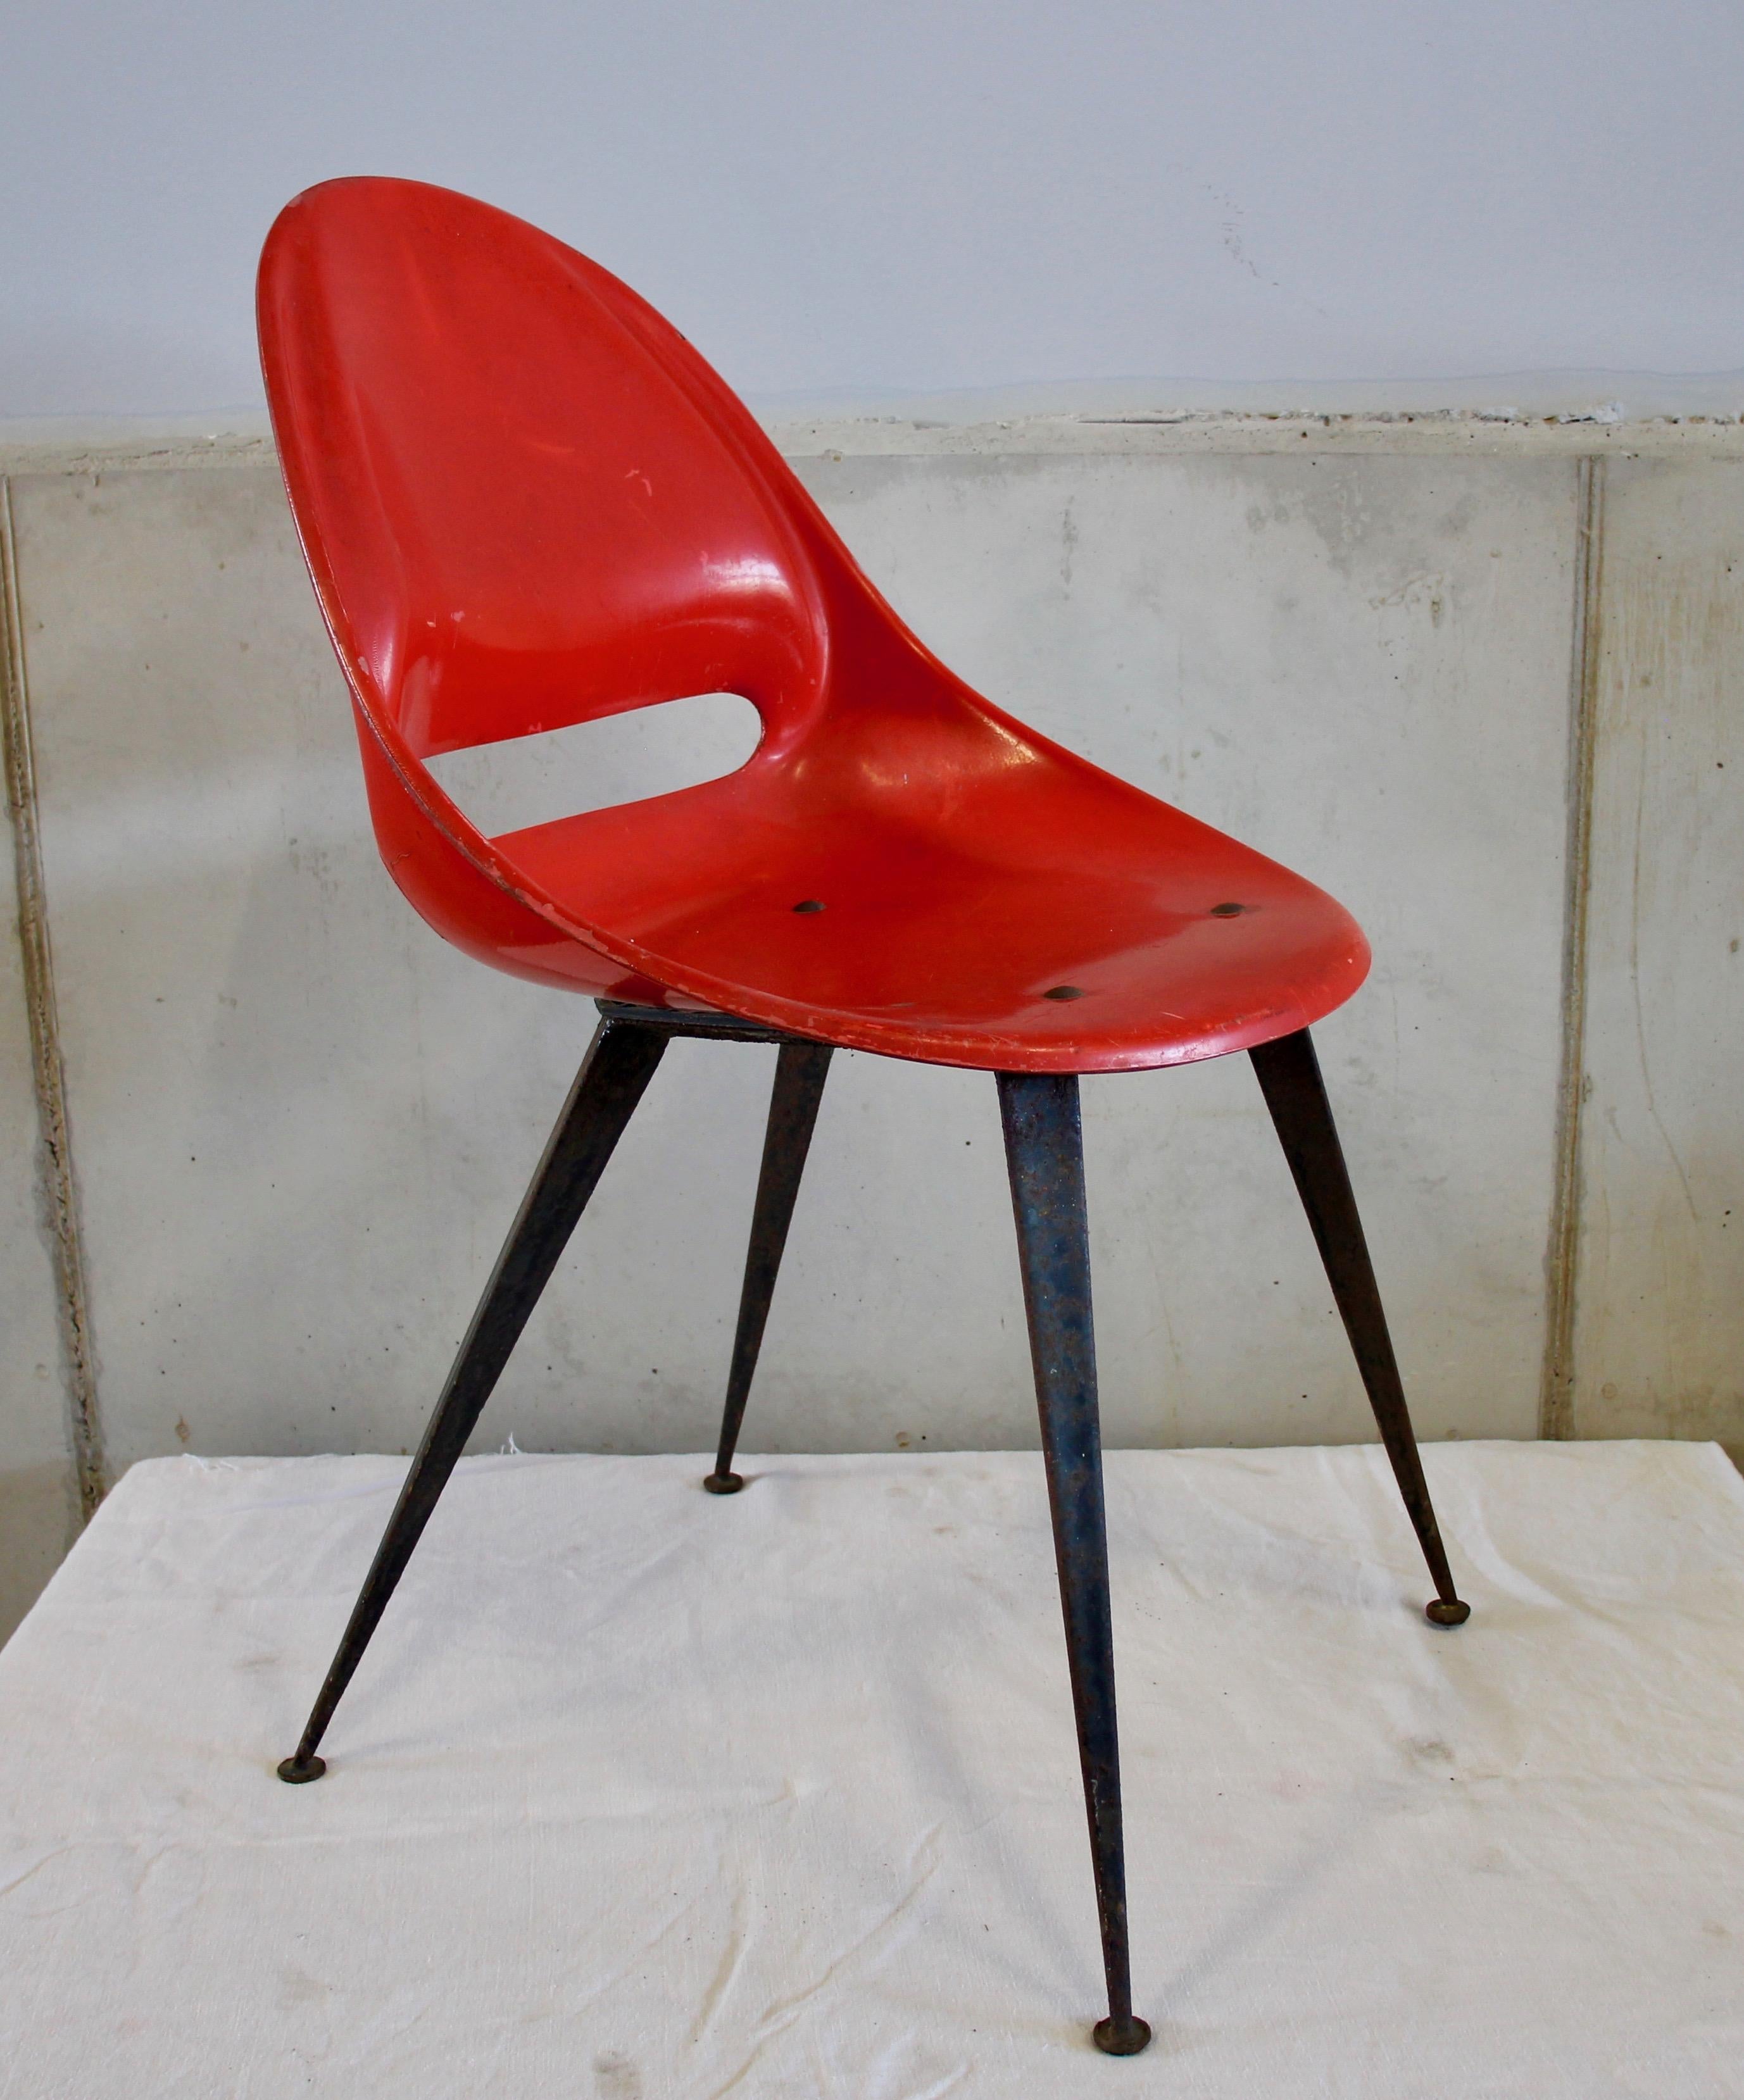 Blackened Red Midcentury Fiberglass Chair, Czech Republic